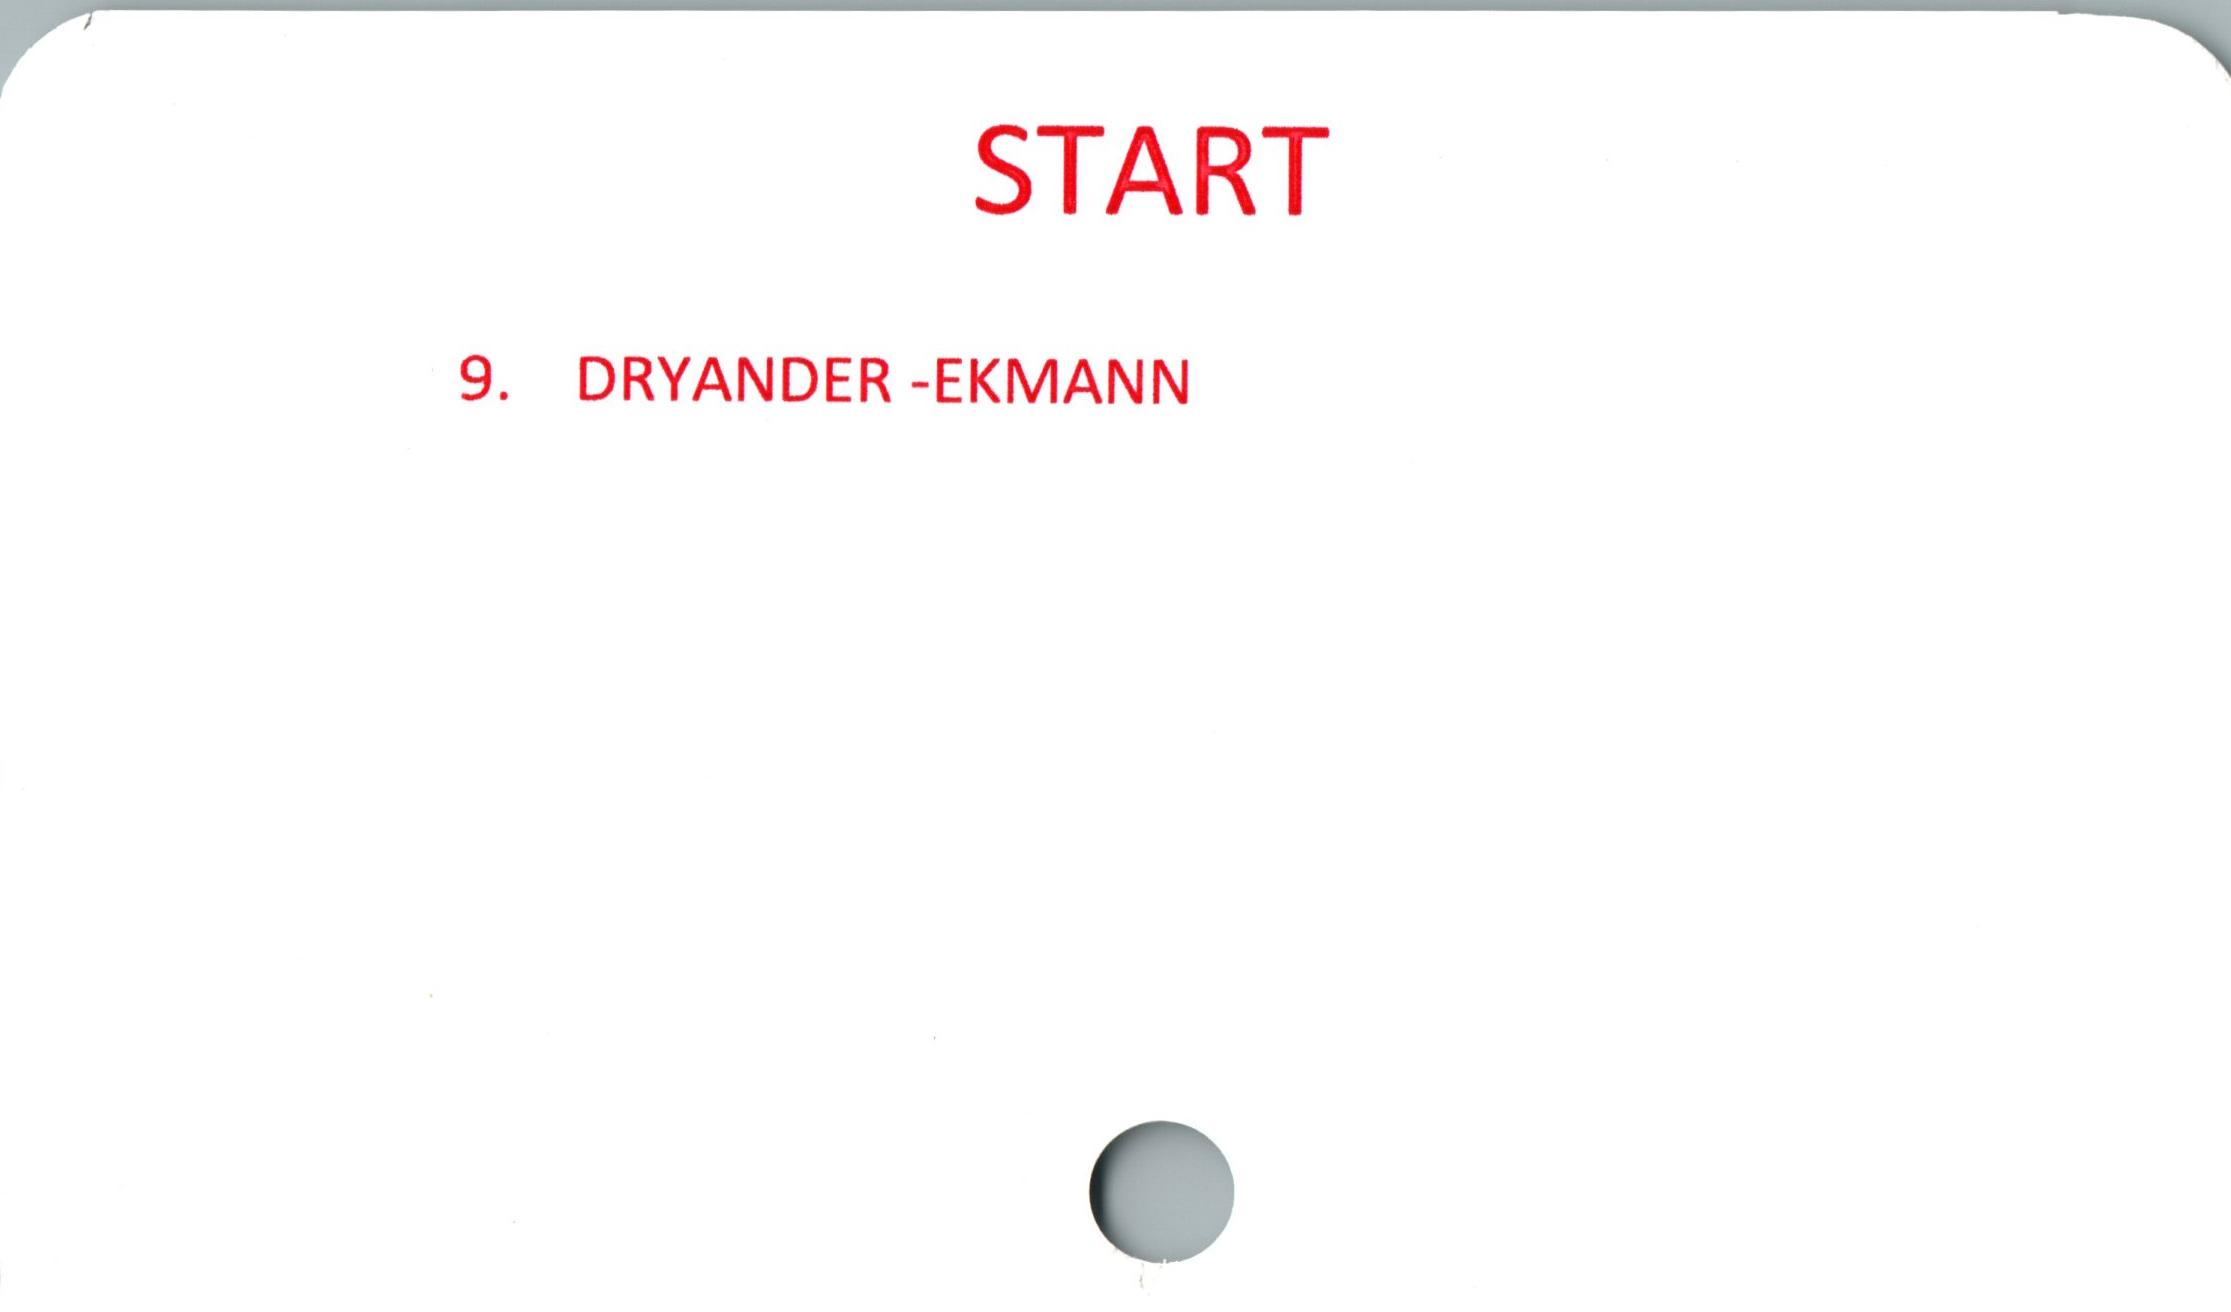 START START

9. DRYANDER -EKMANN